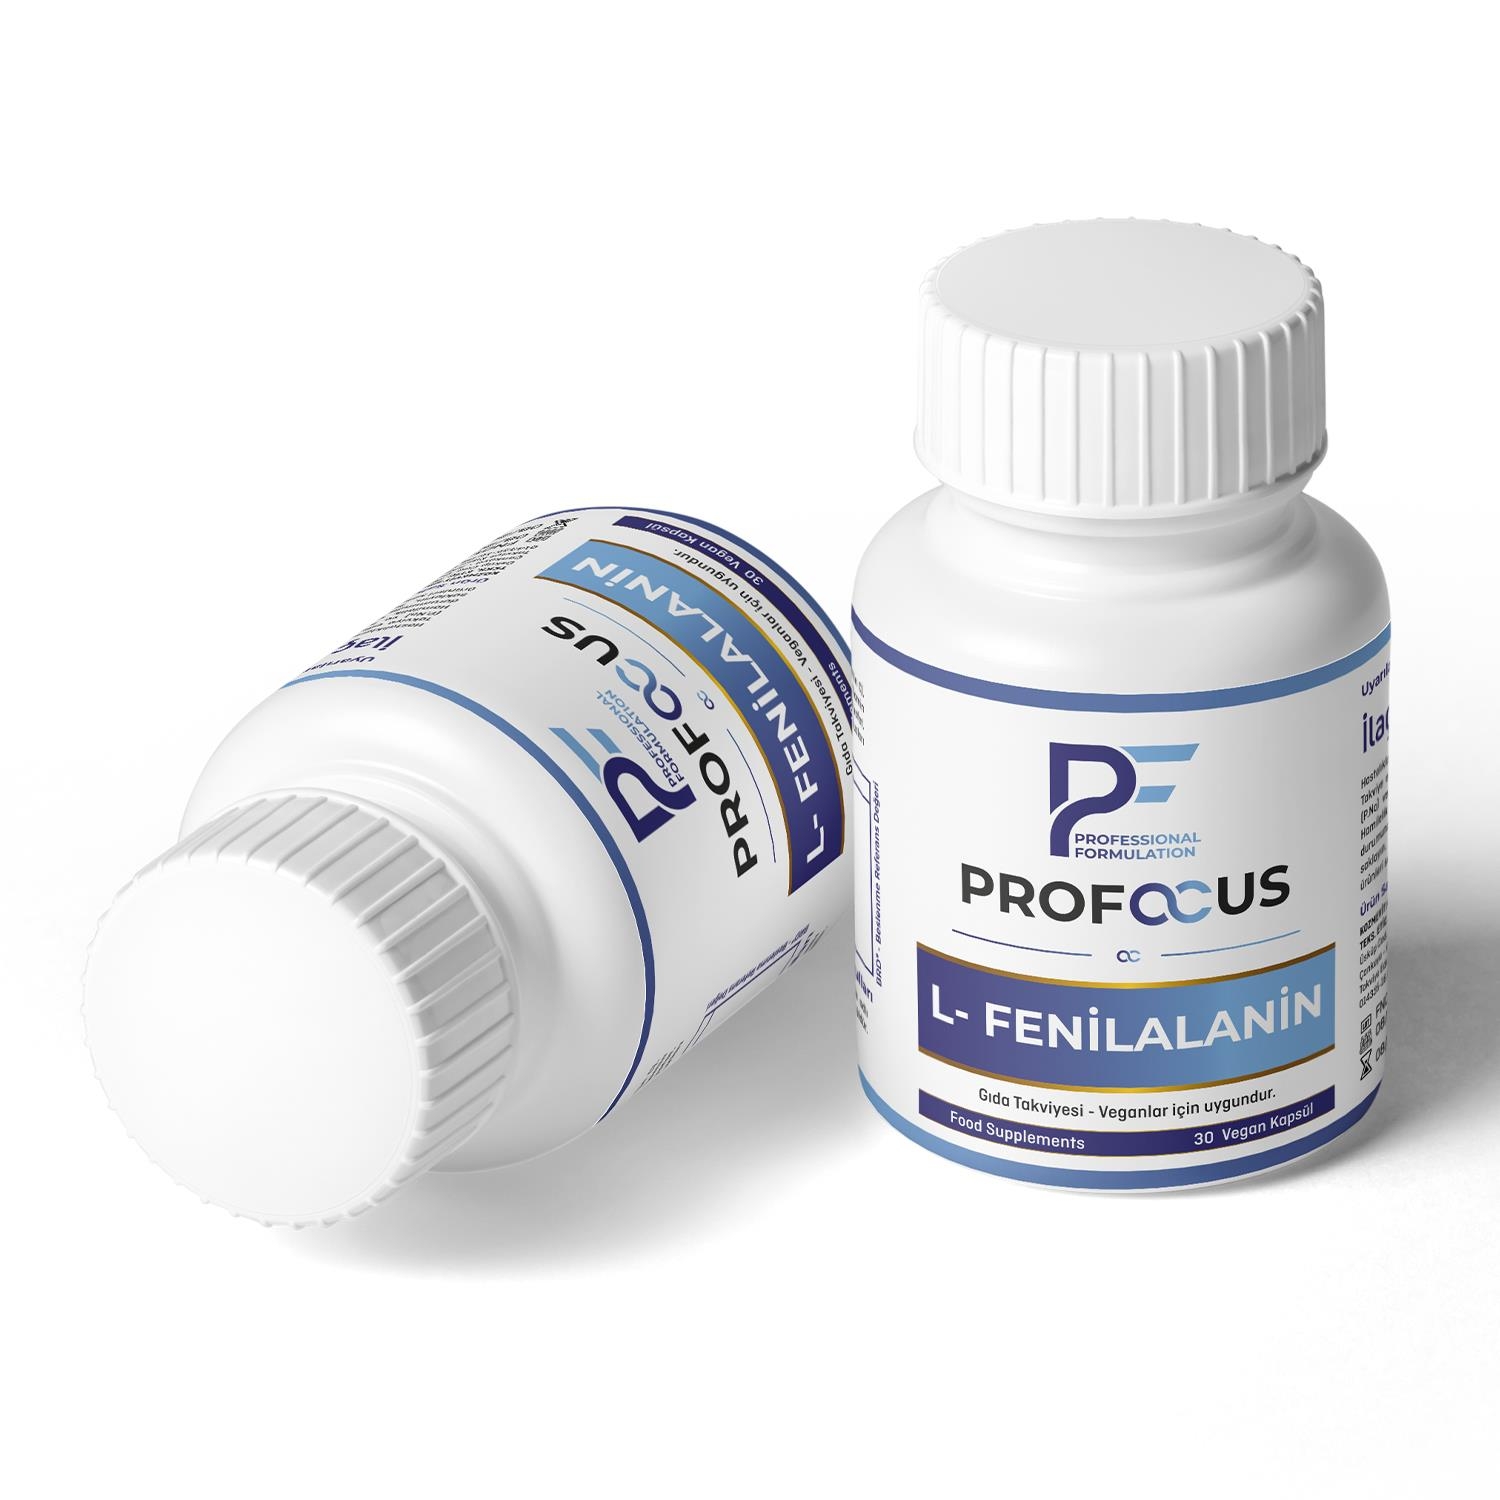 PF ProFocus L-Fenilalanin 30 Vegan Kapsül - 2